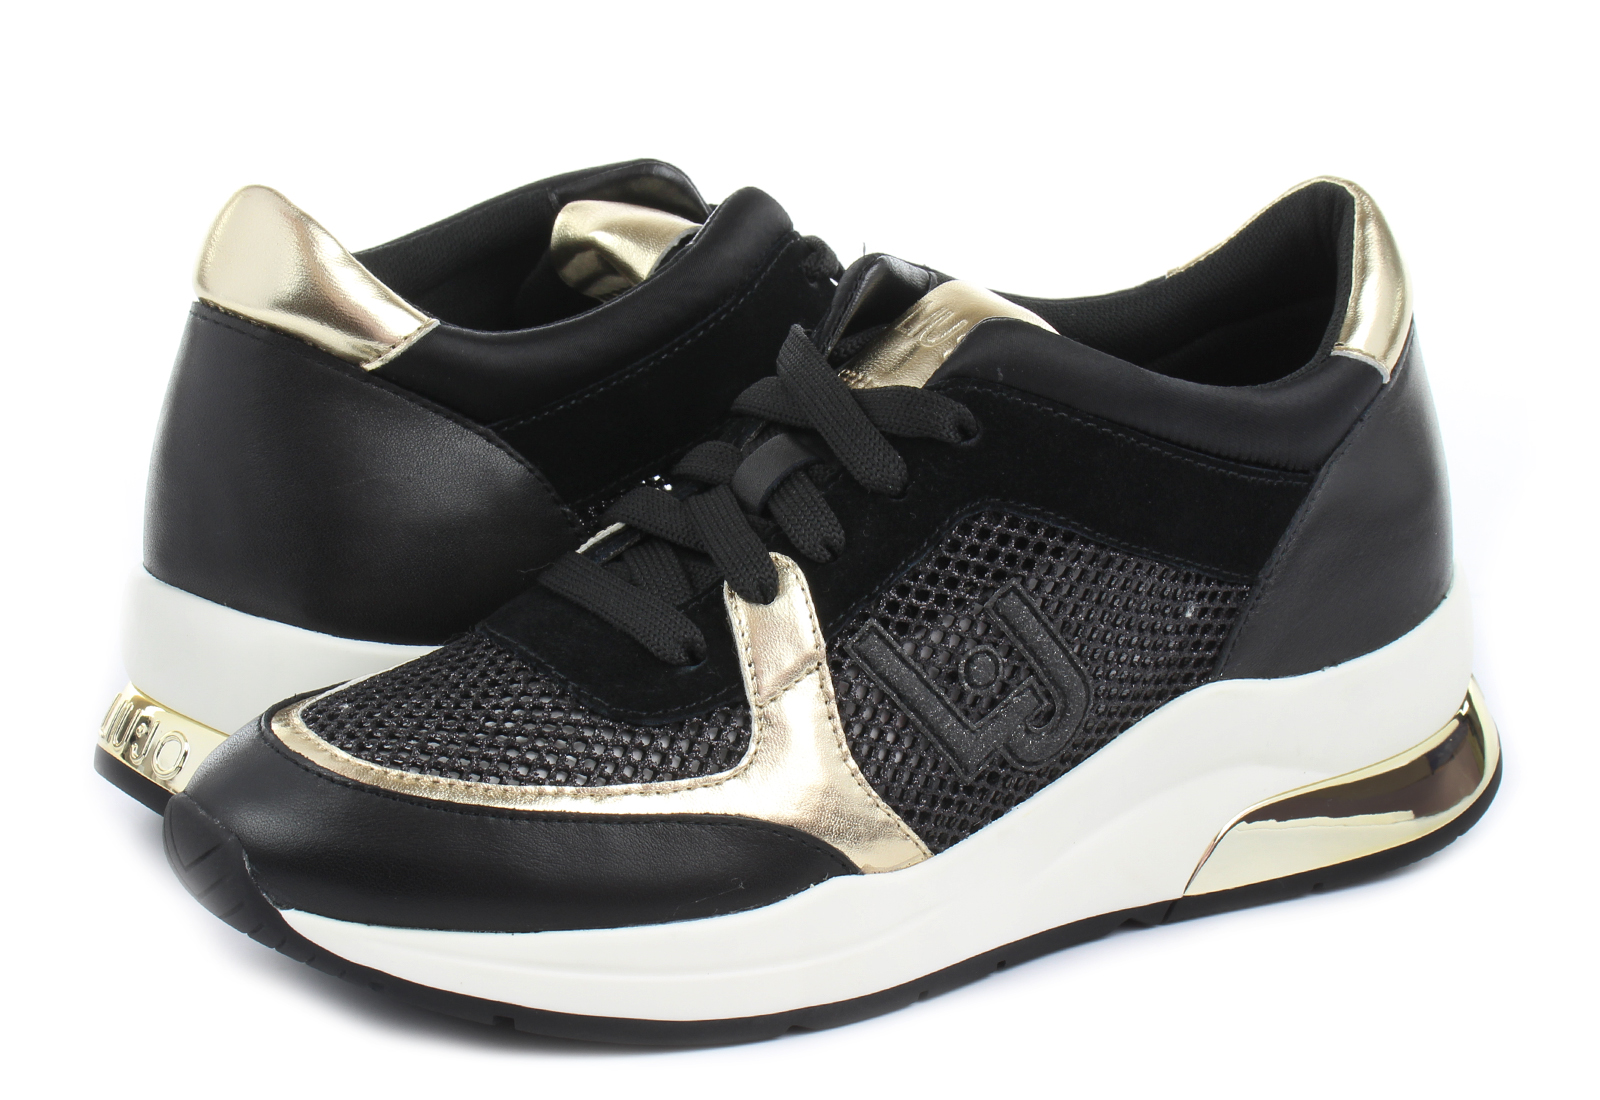 Liu Jo Sneakers - Karlie 12 - BA0031TX032-BLK - Online shop for